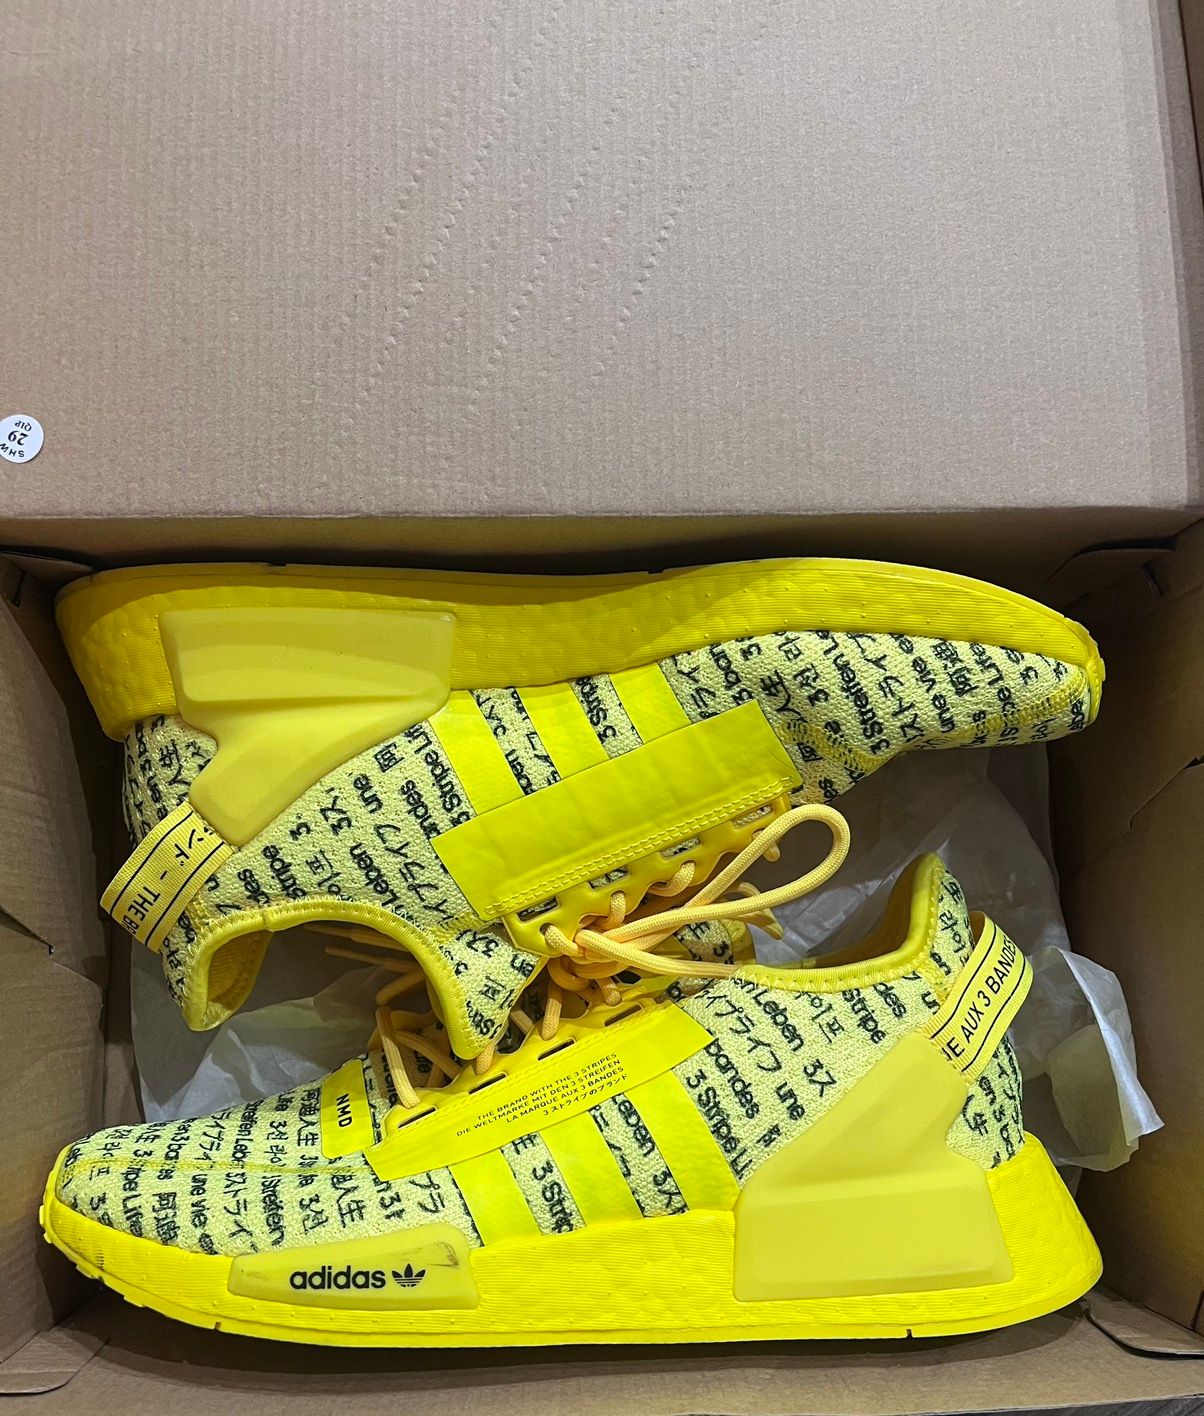 Adidas Adidas NMD R1 V2 Neon Yellow [US 9] Size US 9 / EU 42 - 4 Thumbnail